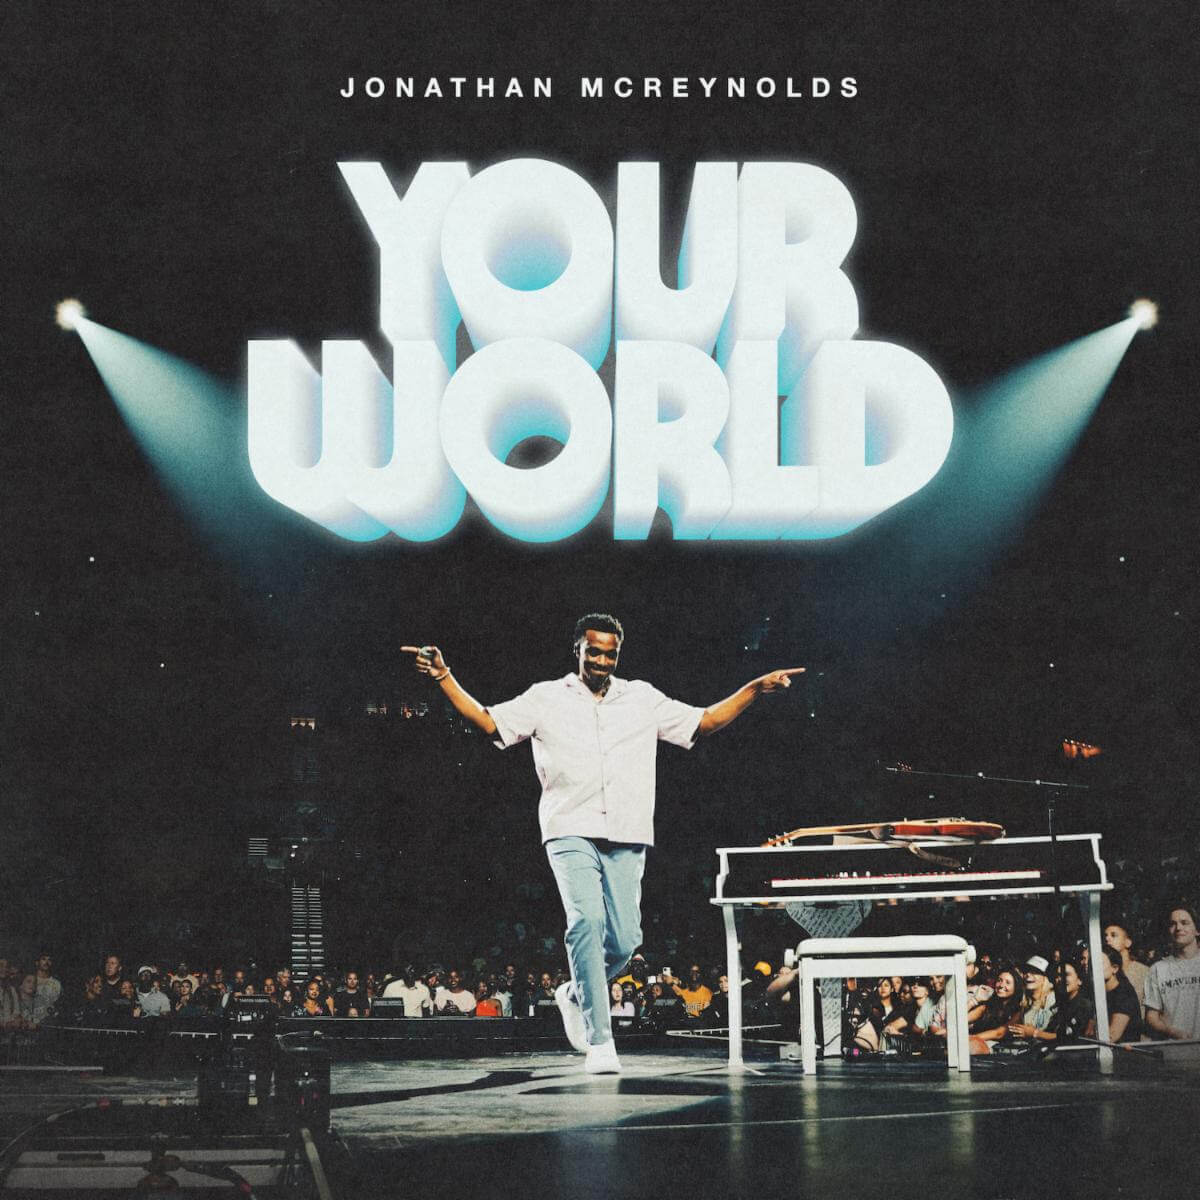 Jonathan-McReynolds_Your World